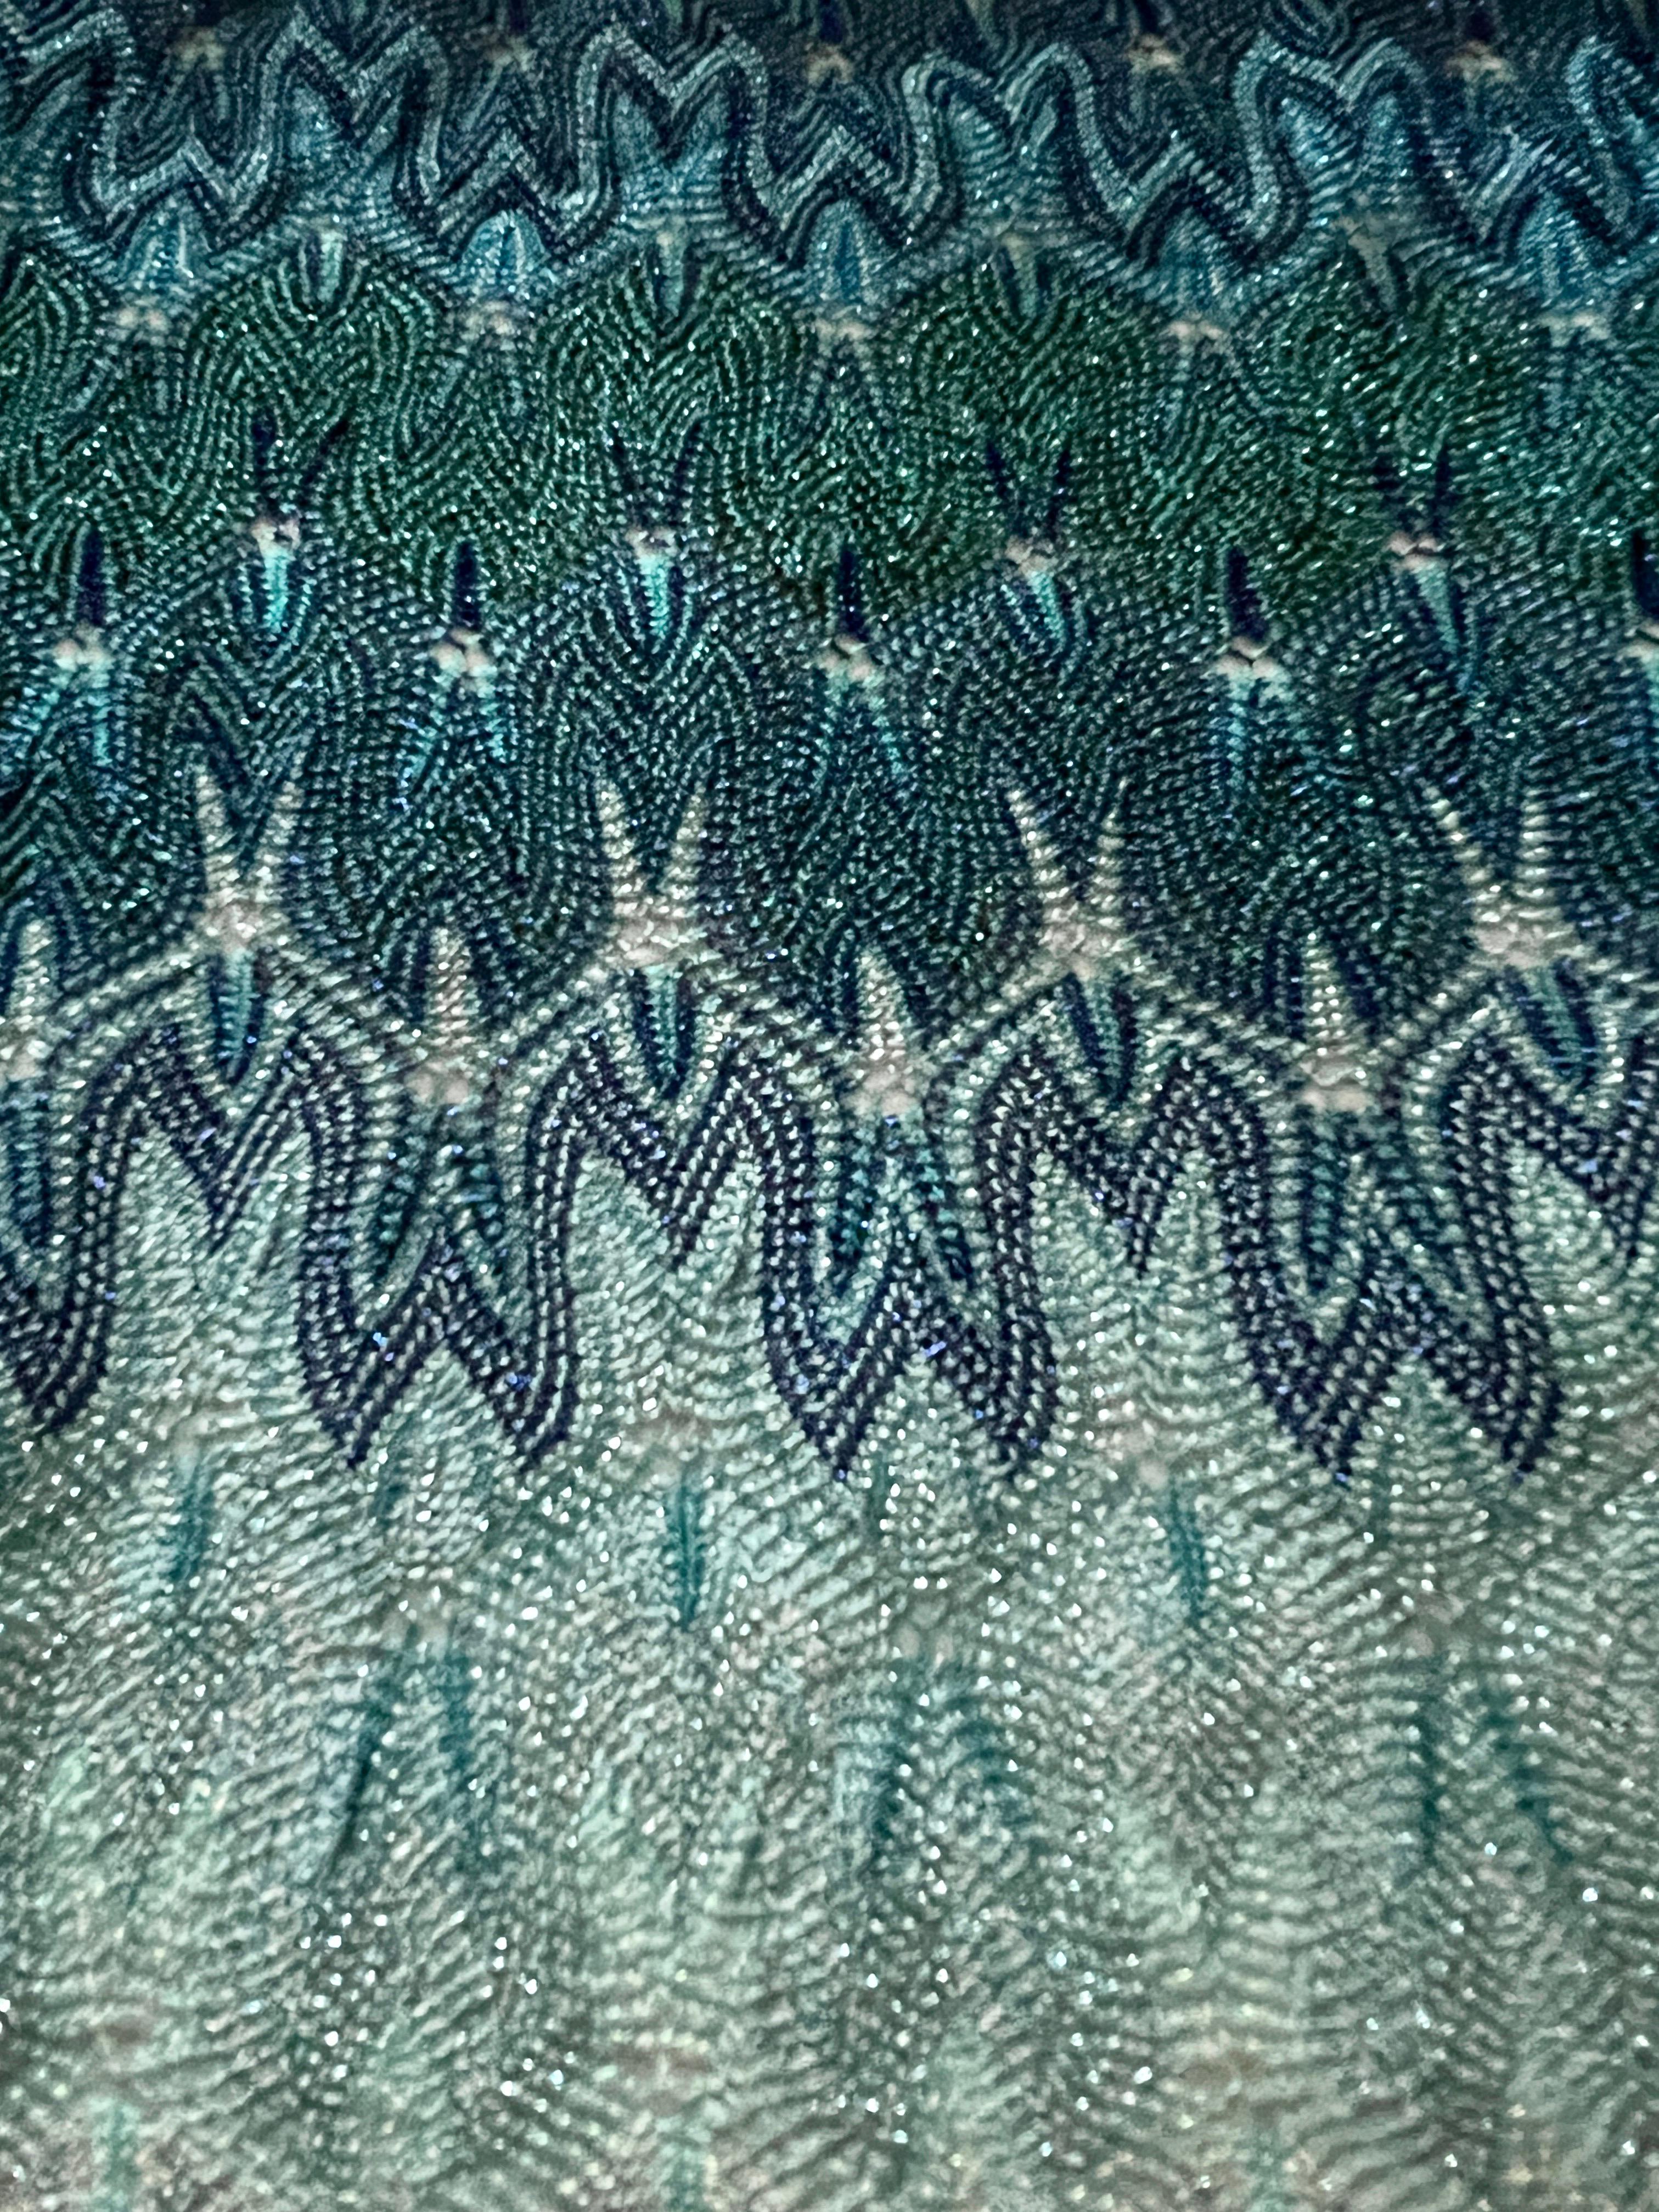 Women's UNWORN Missoni Metallic Seafoam Blue Crochet Knit Cocktail Dress 42